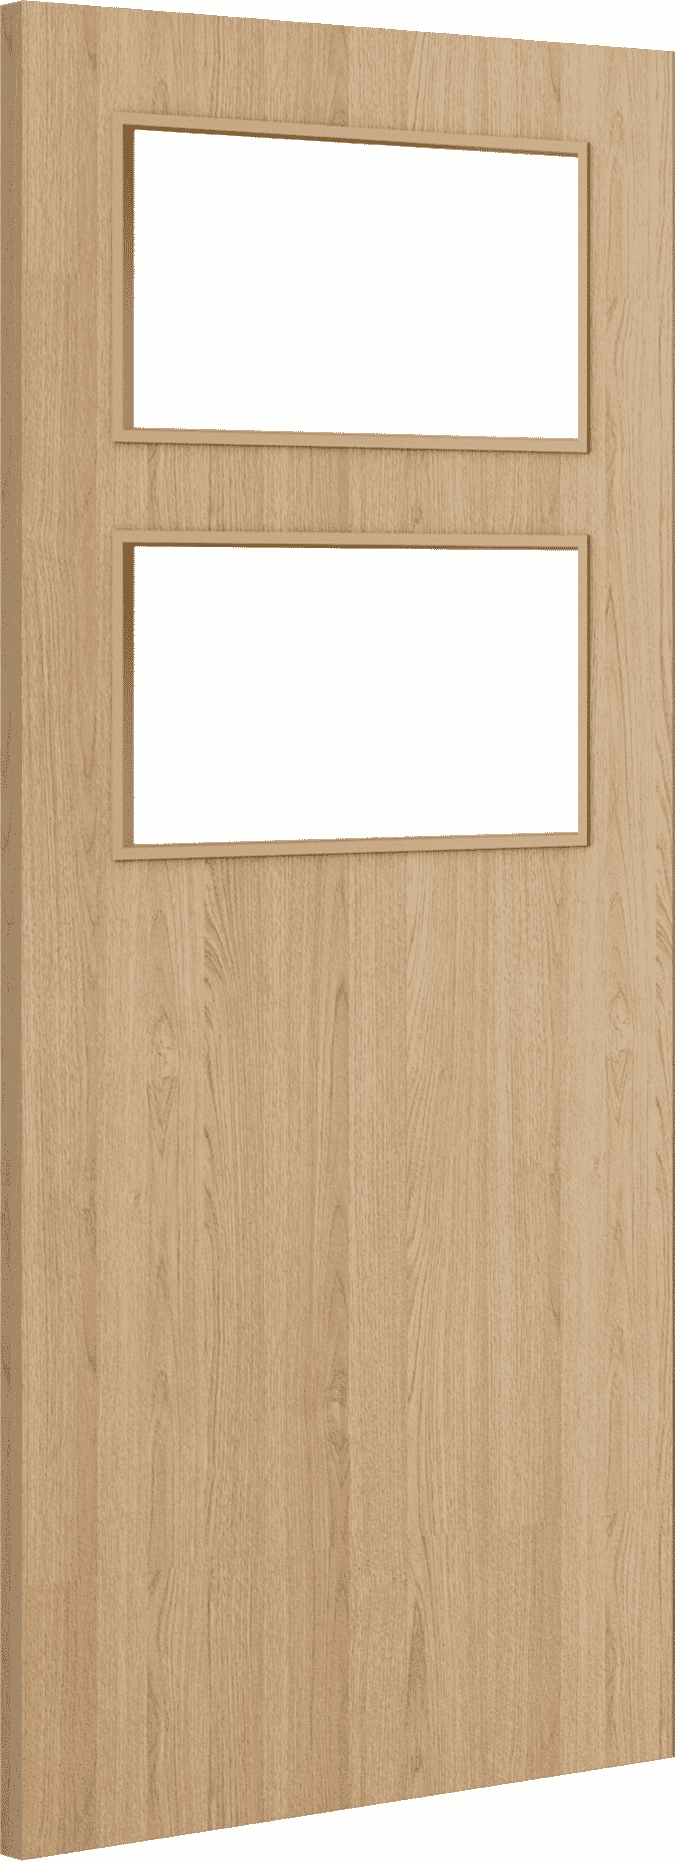 1981mm x 610mm x 44mm (24") Architectural Oak 02 Frosted Glazed - Prefinished FD30 Fire Door Blank